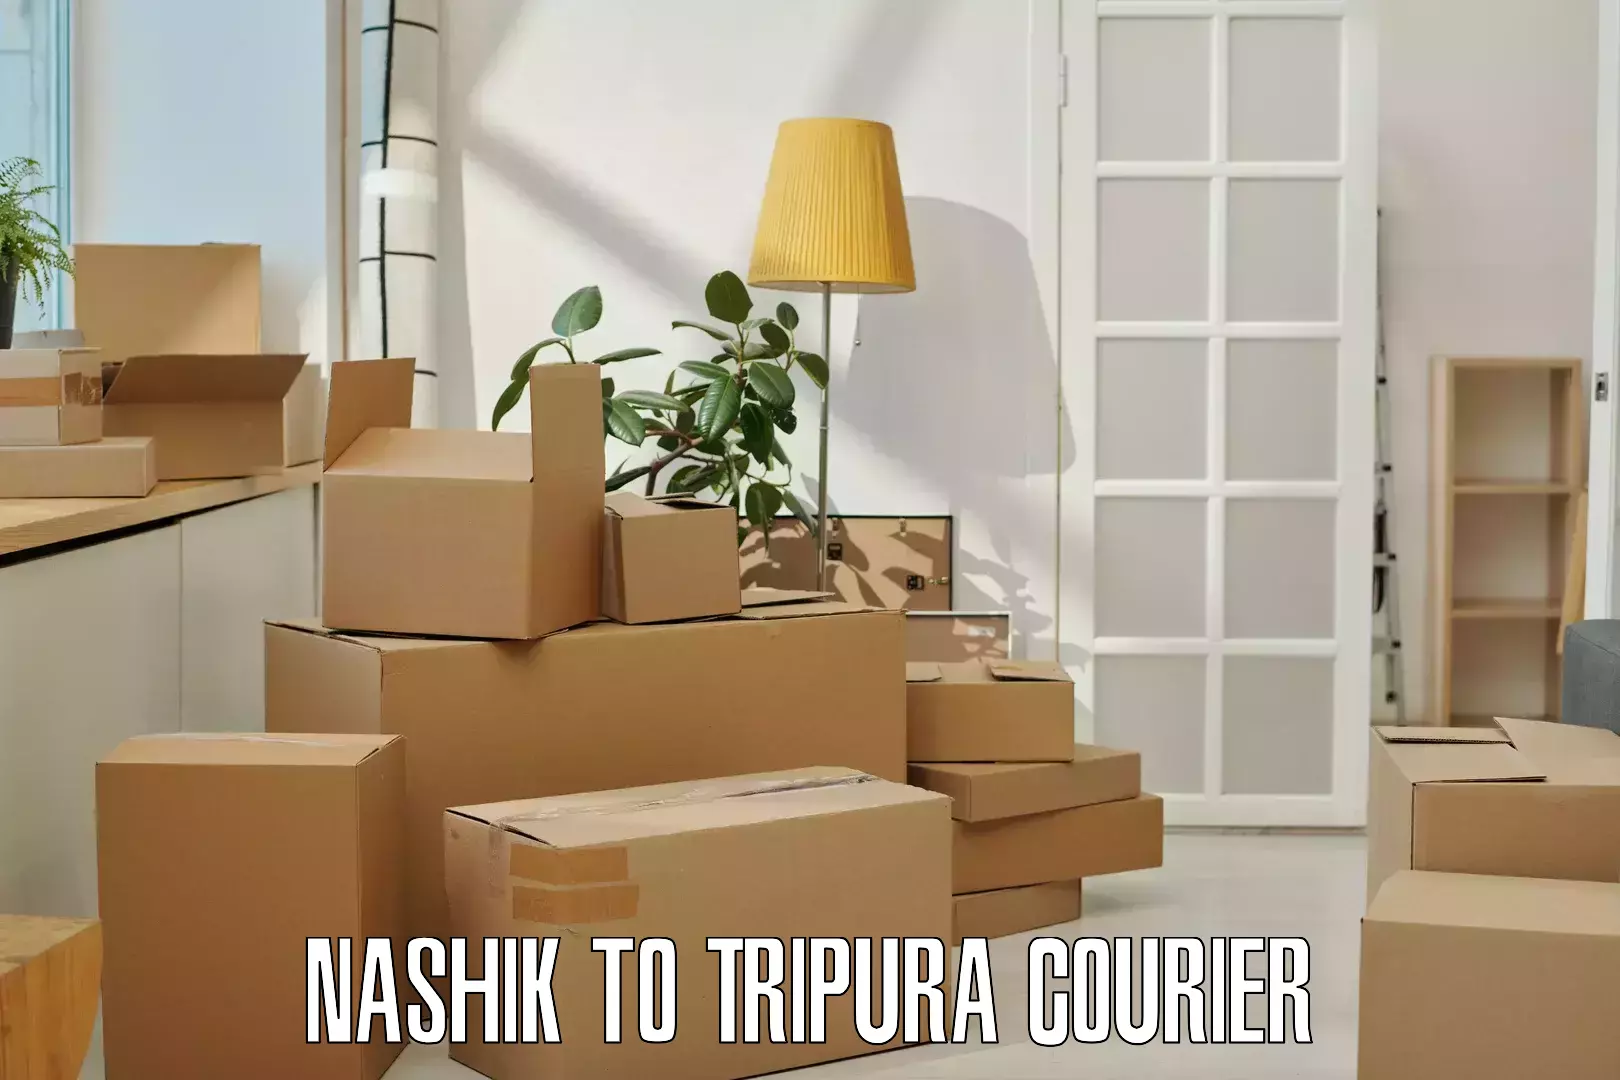 24-hour courier service Nashik to IIIT Agartala